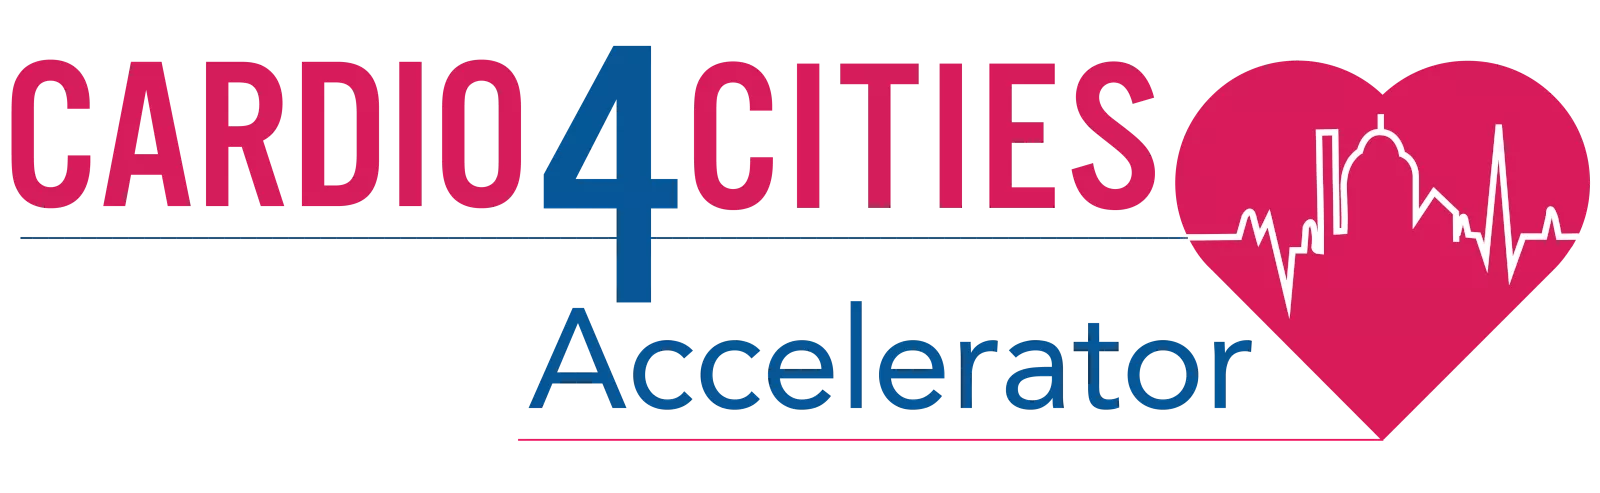 CARDIO4Cities Accelerator Logo